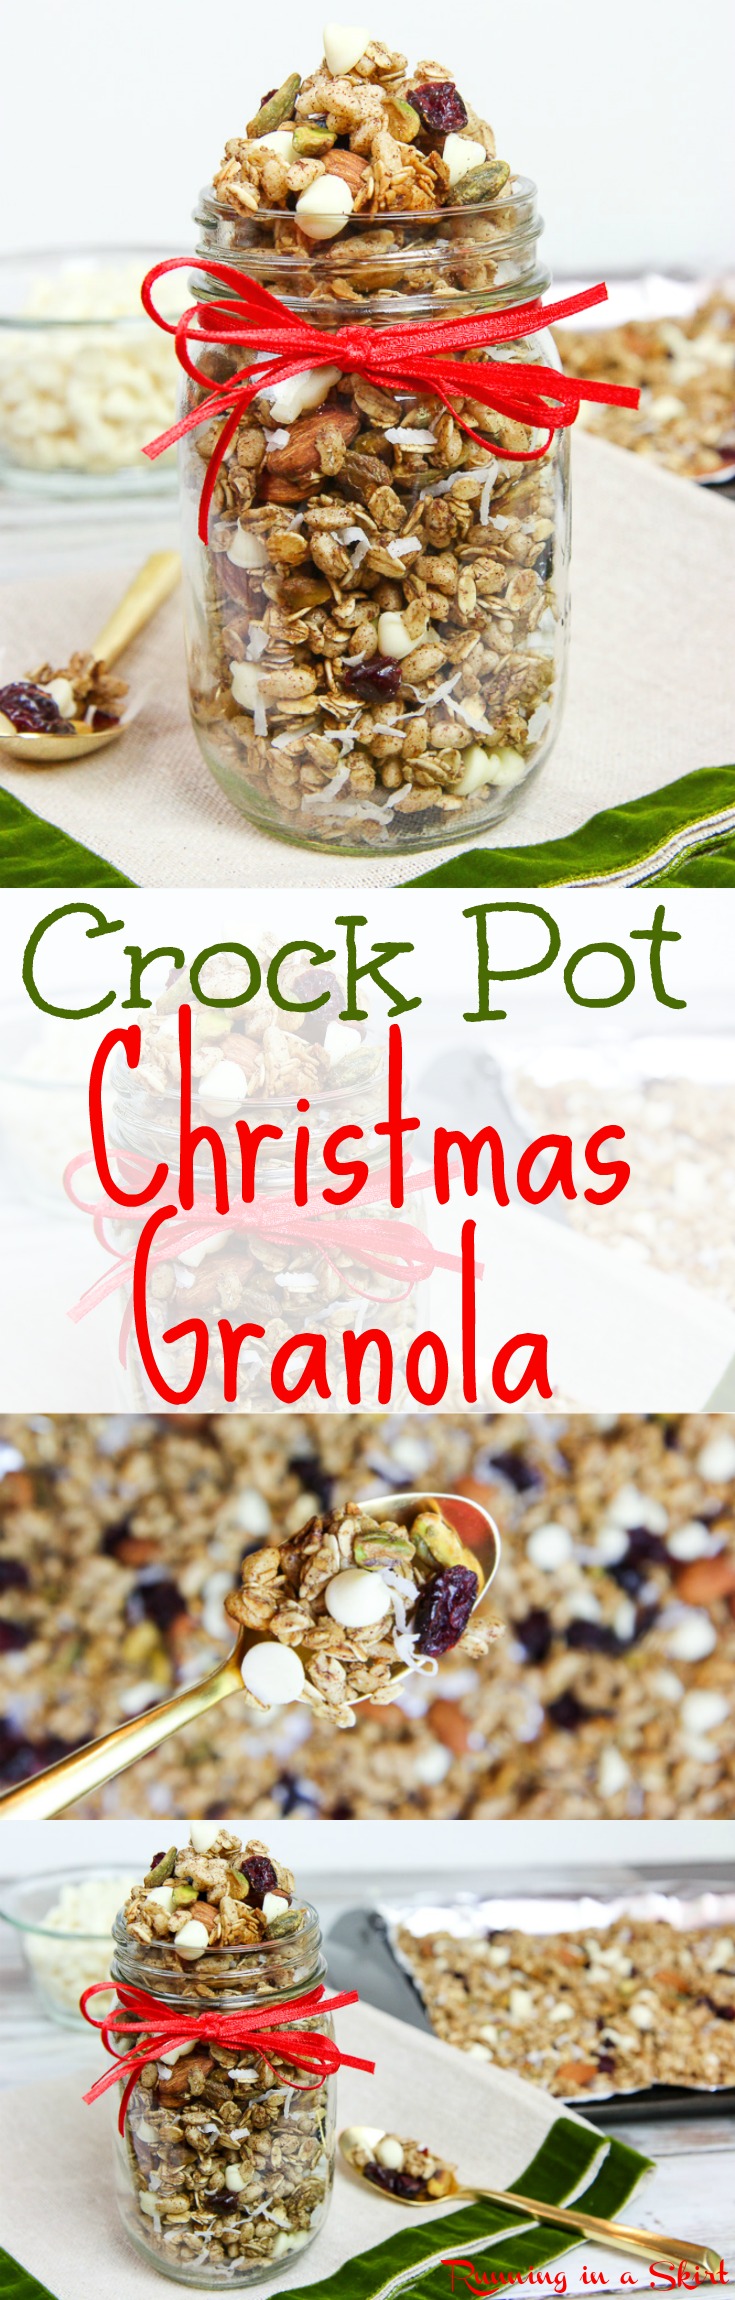 Healthy Crock Pot Christmas Granola recipe / Running in a Skirt